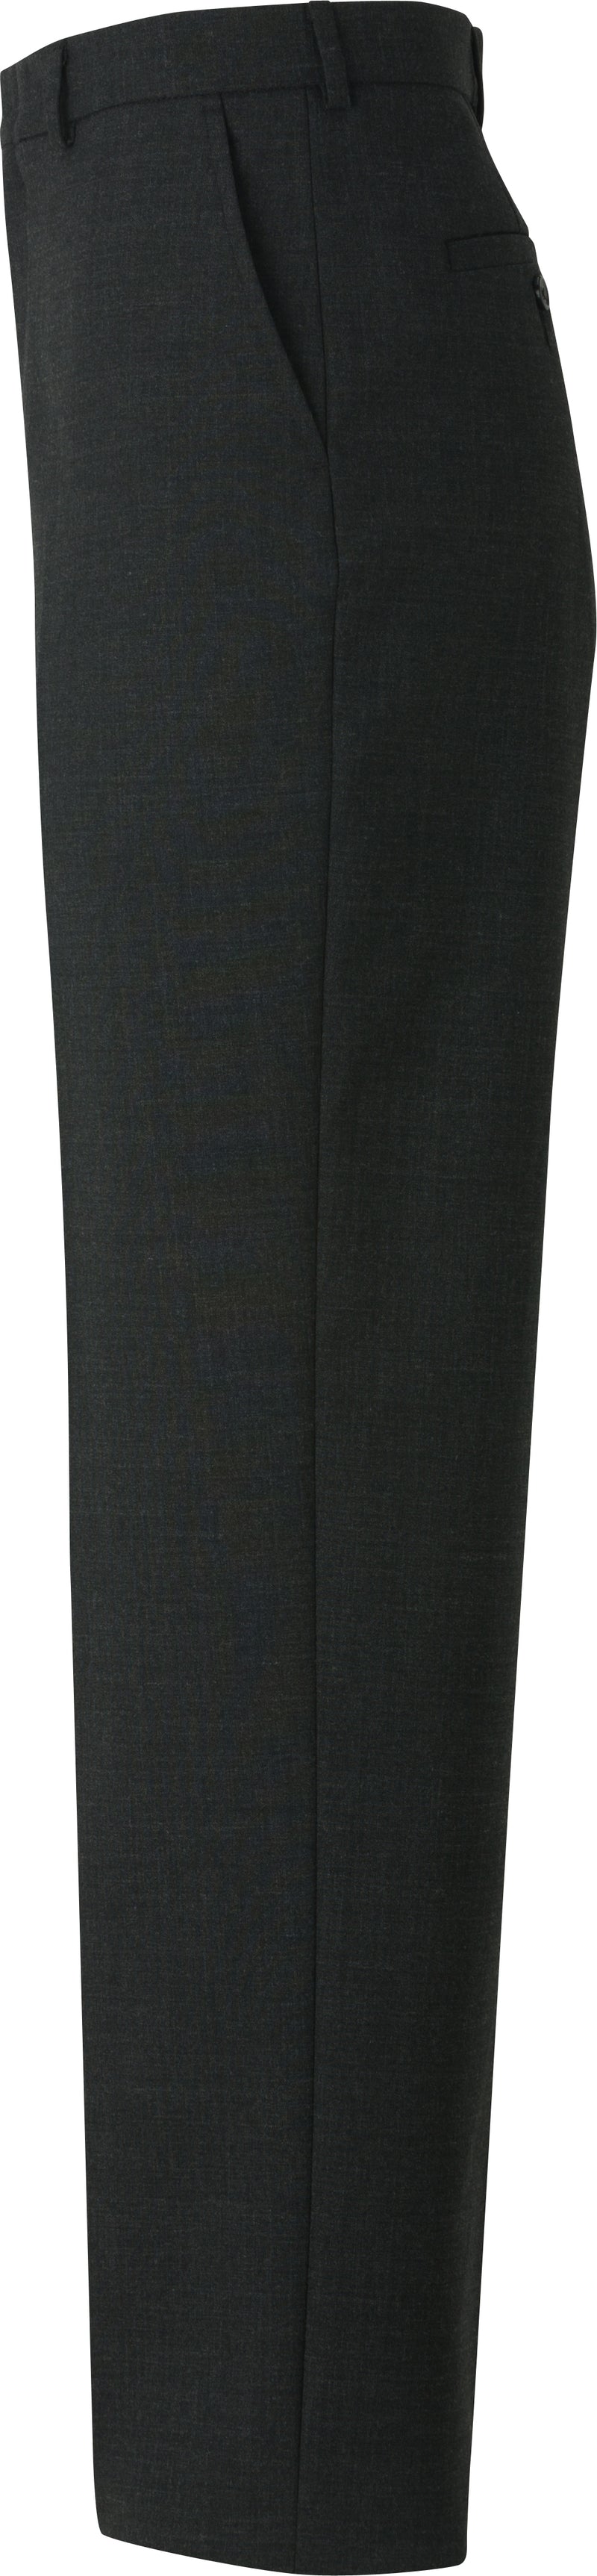 Edwards [2631] Men’s EZ Fit Pleated-Front Dress Pant. Redwood & Ross Signature Collection. Live Chat For Bulk Discounts.